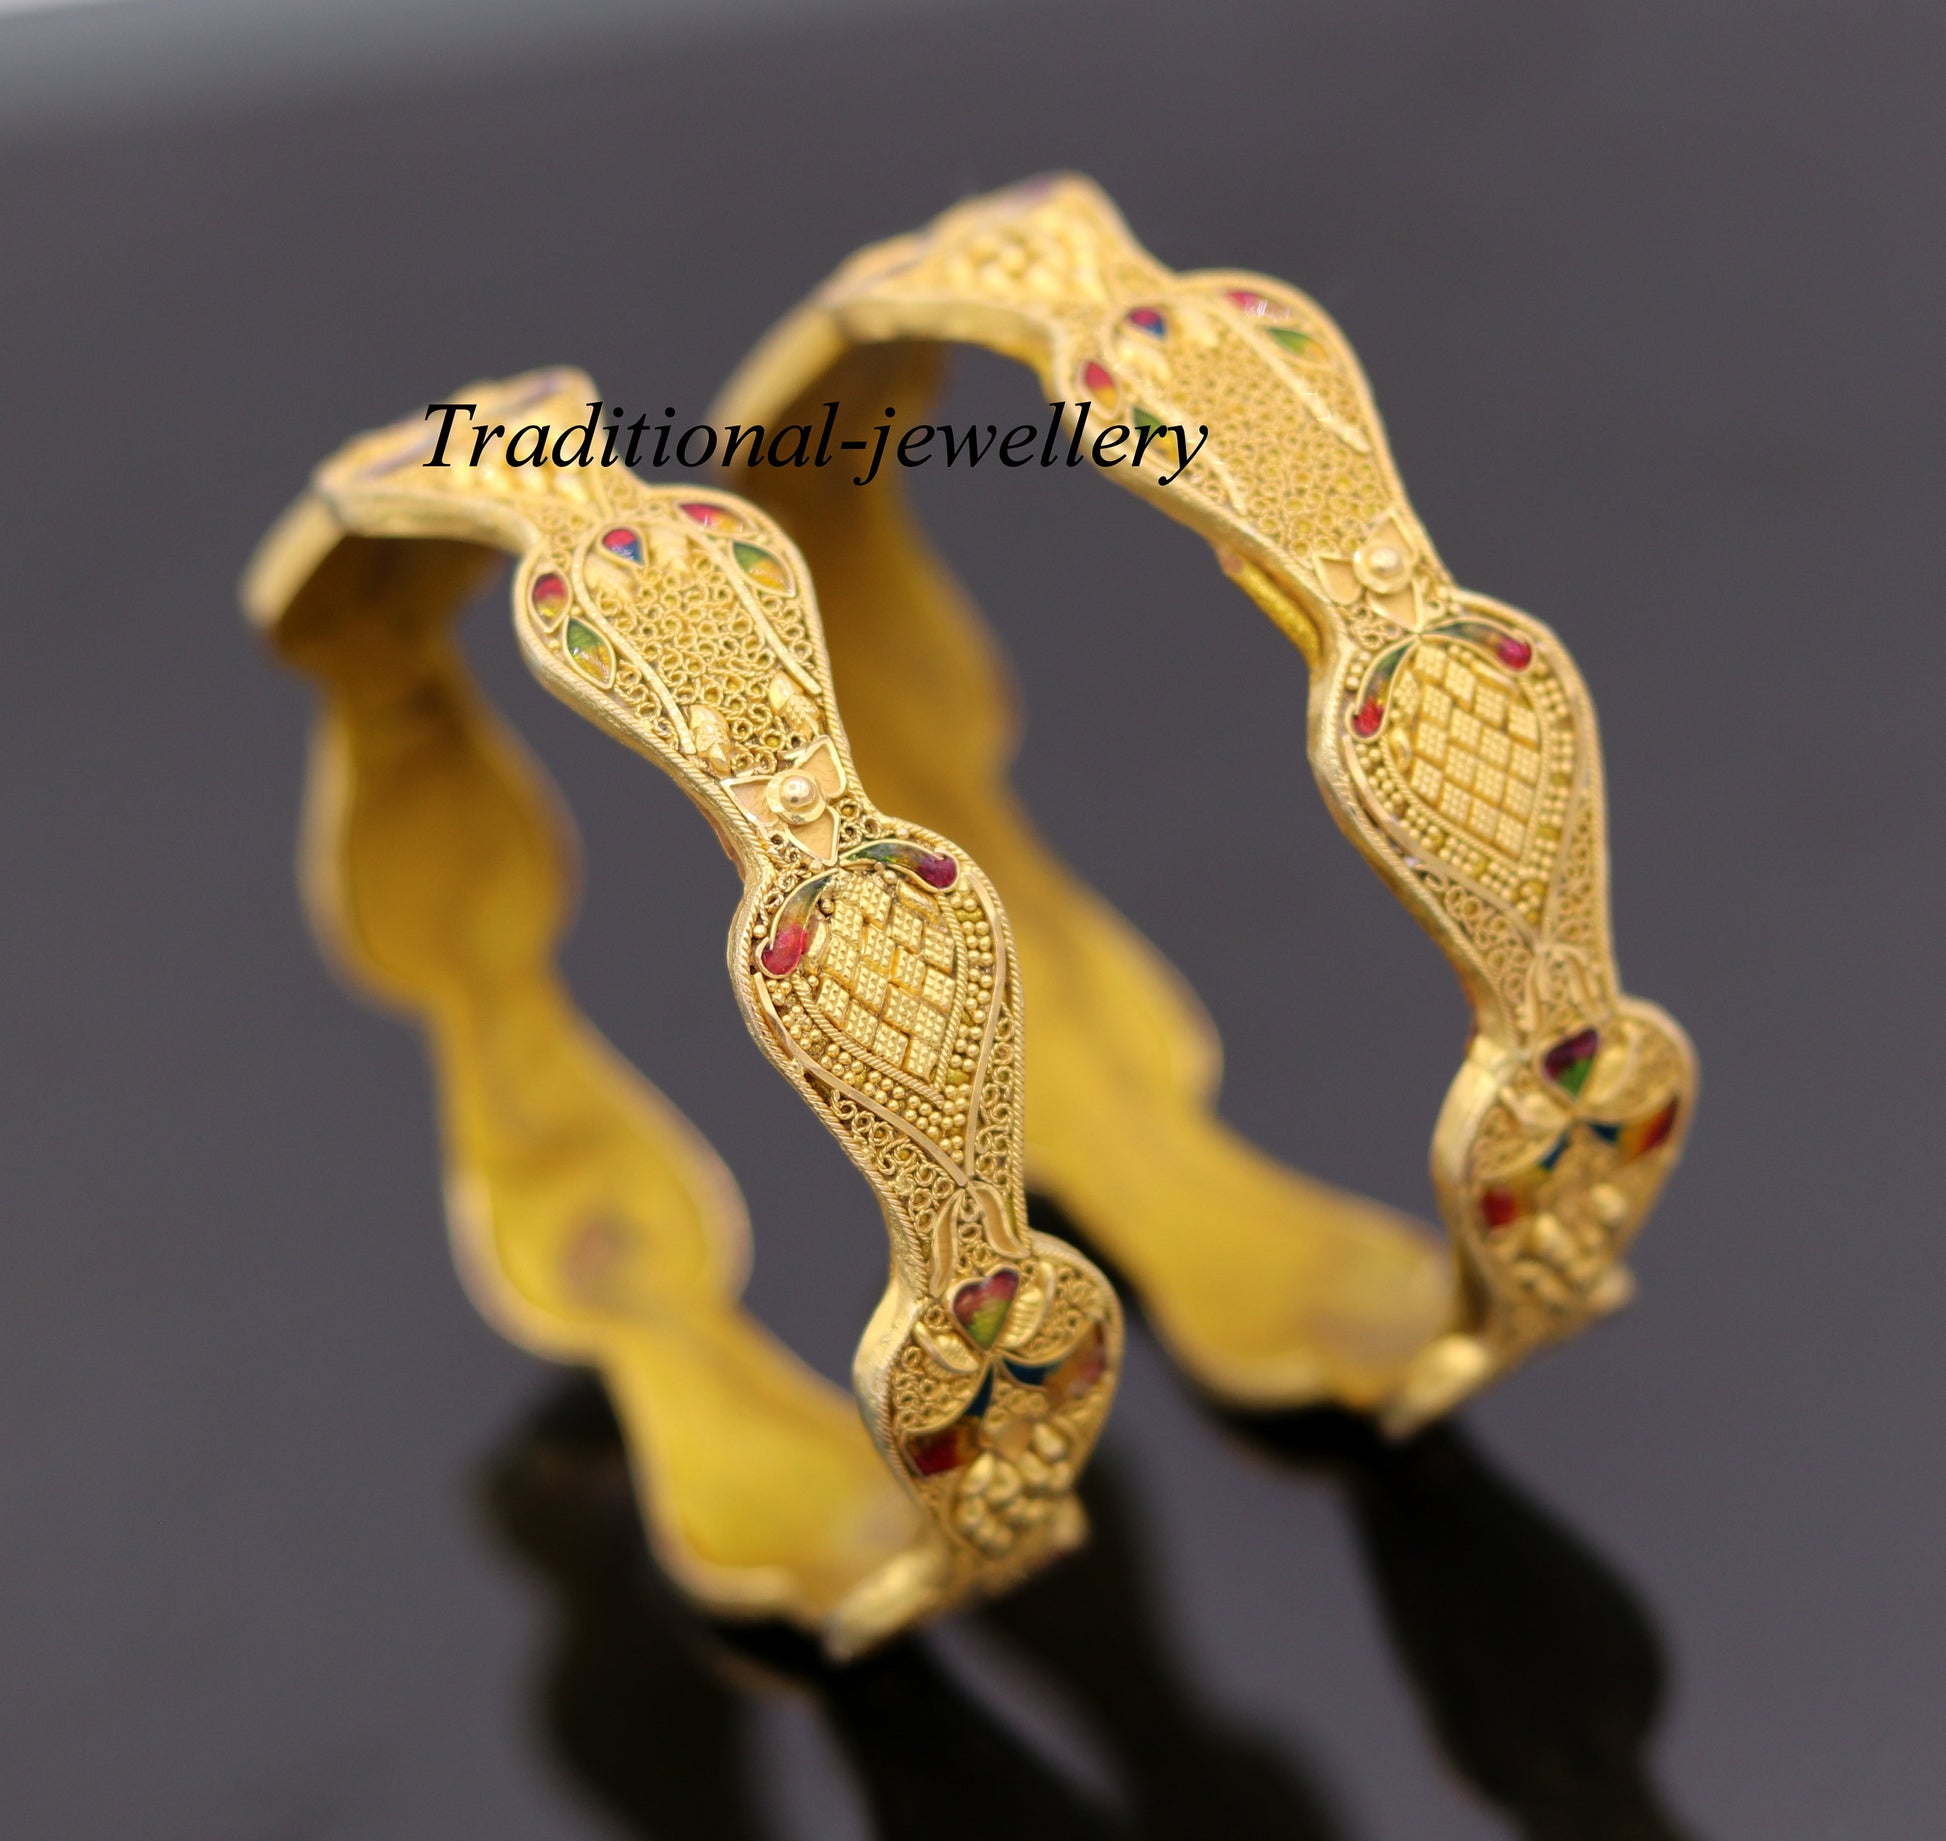 Genuine 22Kt yellow gold handmade solid filigree work bangle bracelet amazing design women's girl's bridal ba40  jewelry - TRIBAL ORNAMENTS